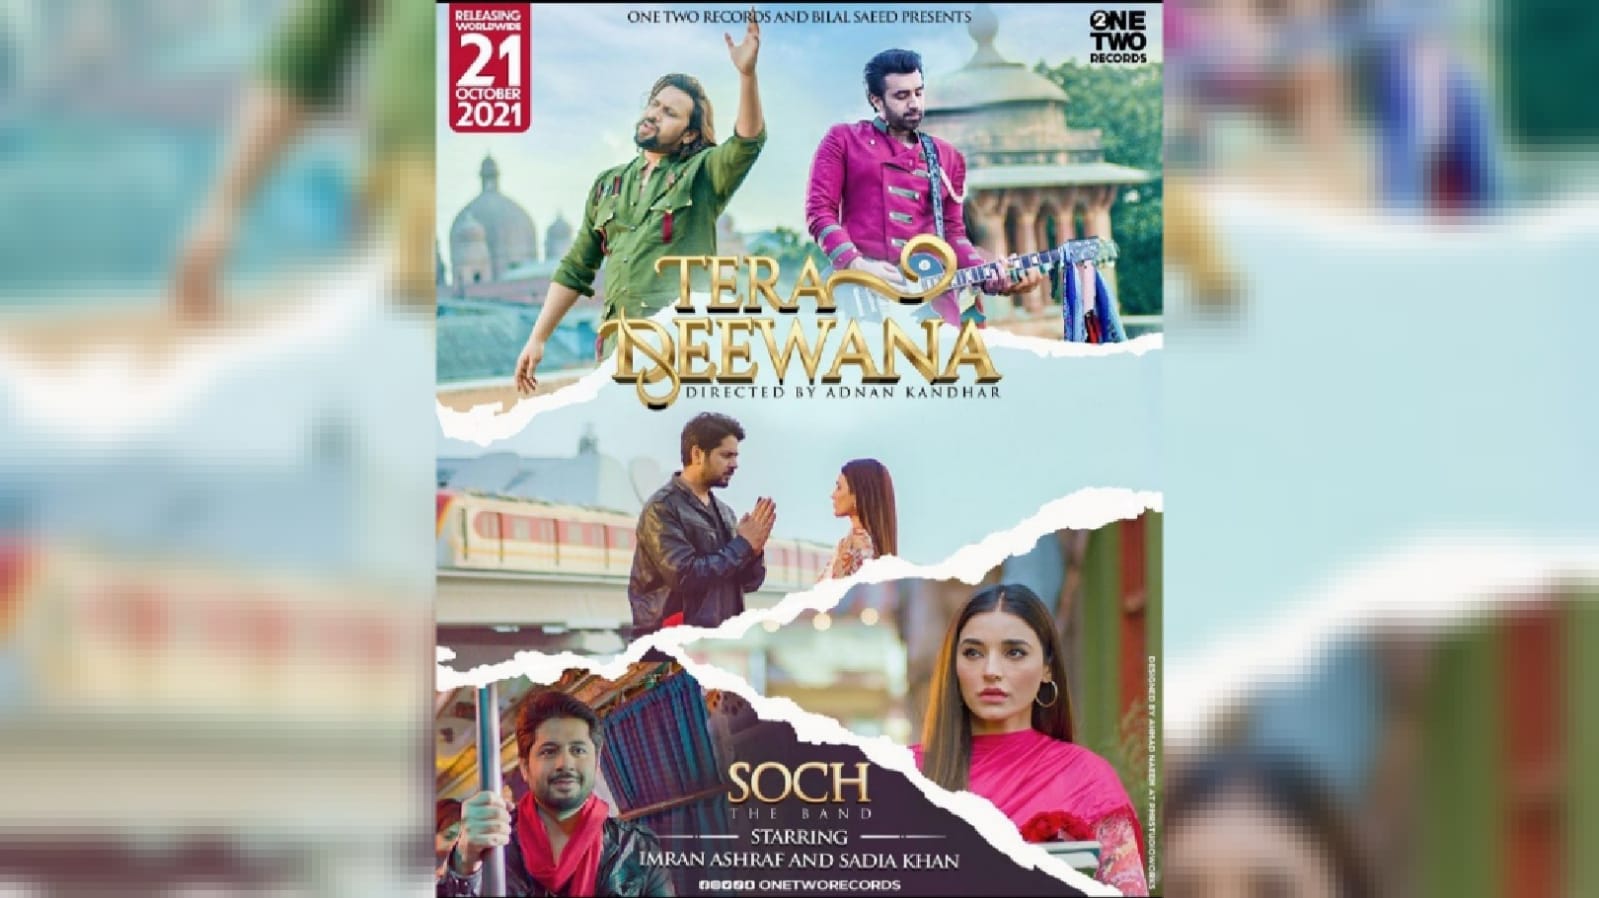 Music video 'Tera Deewana' starring Imran Ashraf, Sadia Khan set for  worldwide release - Minute Mirror